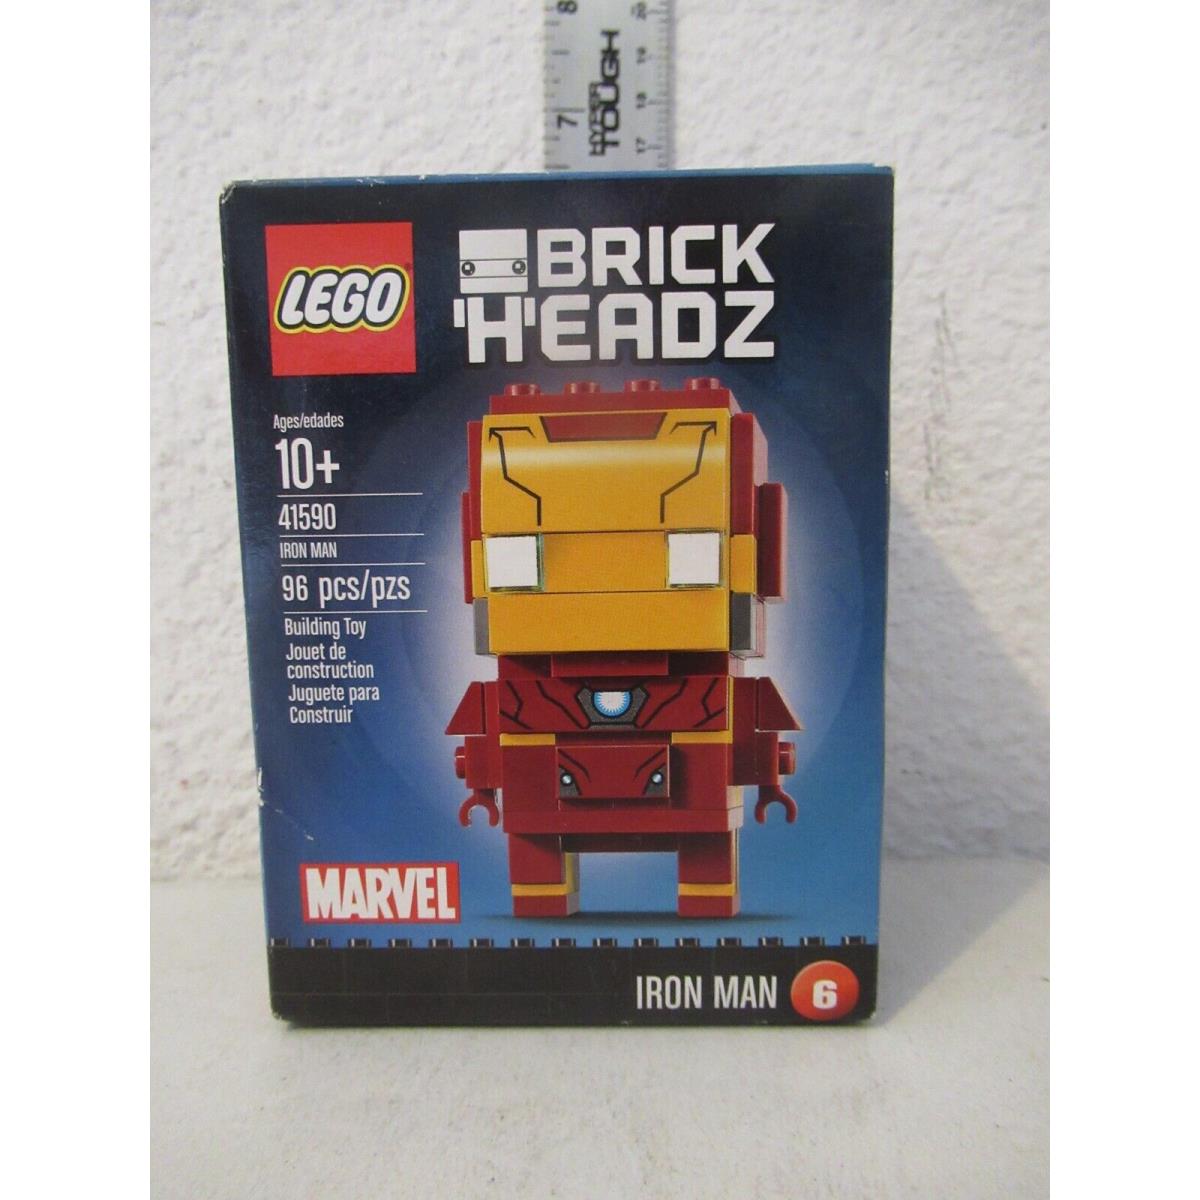 Lego Brick Headz Iron Man 41590